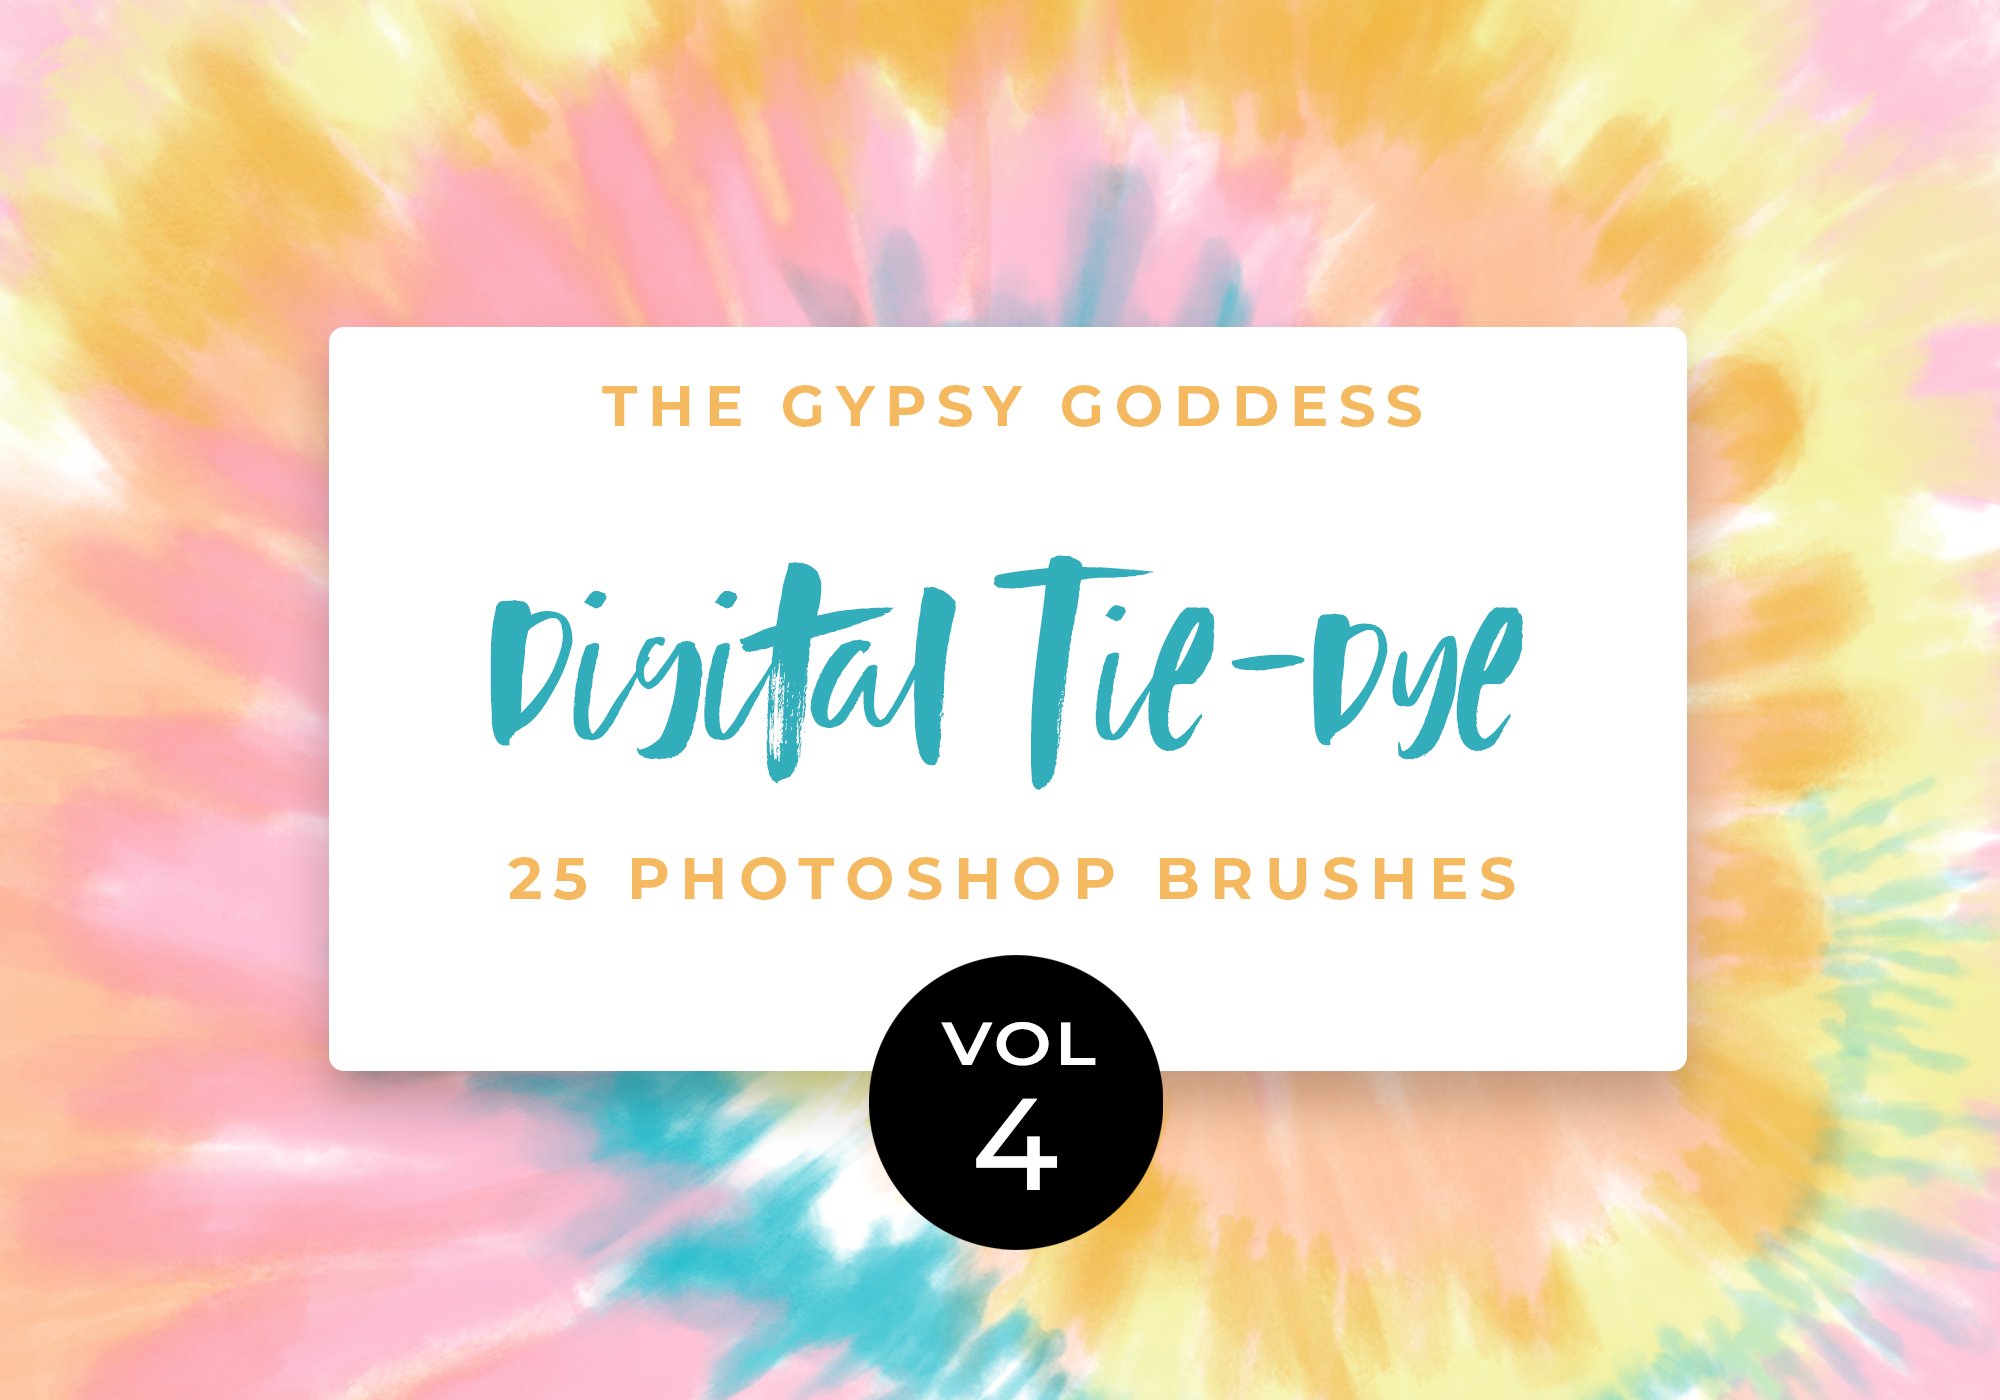 Digital Tie-Dye Brushes Vol 4cover image.